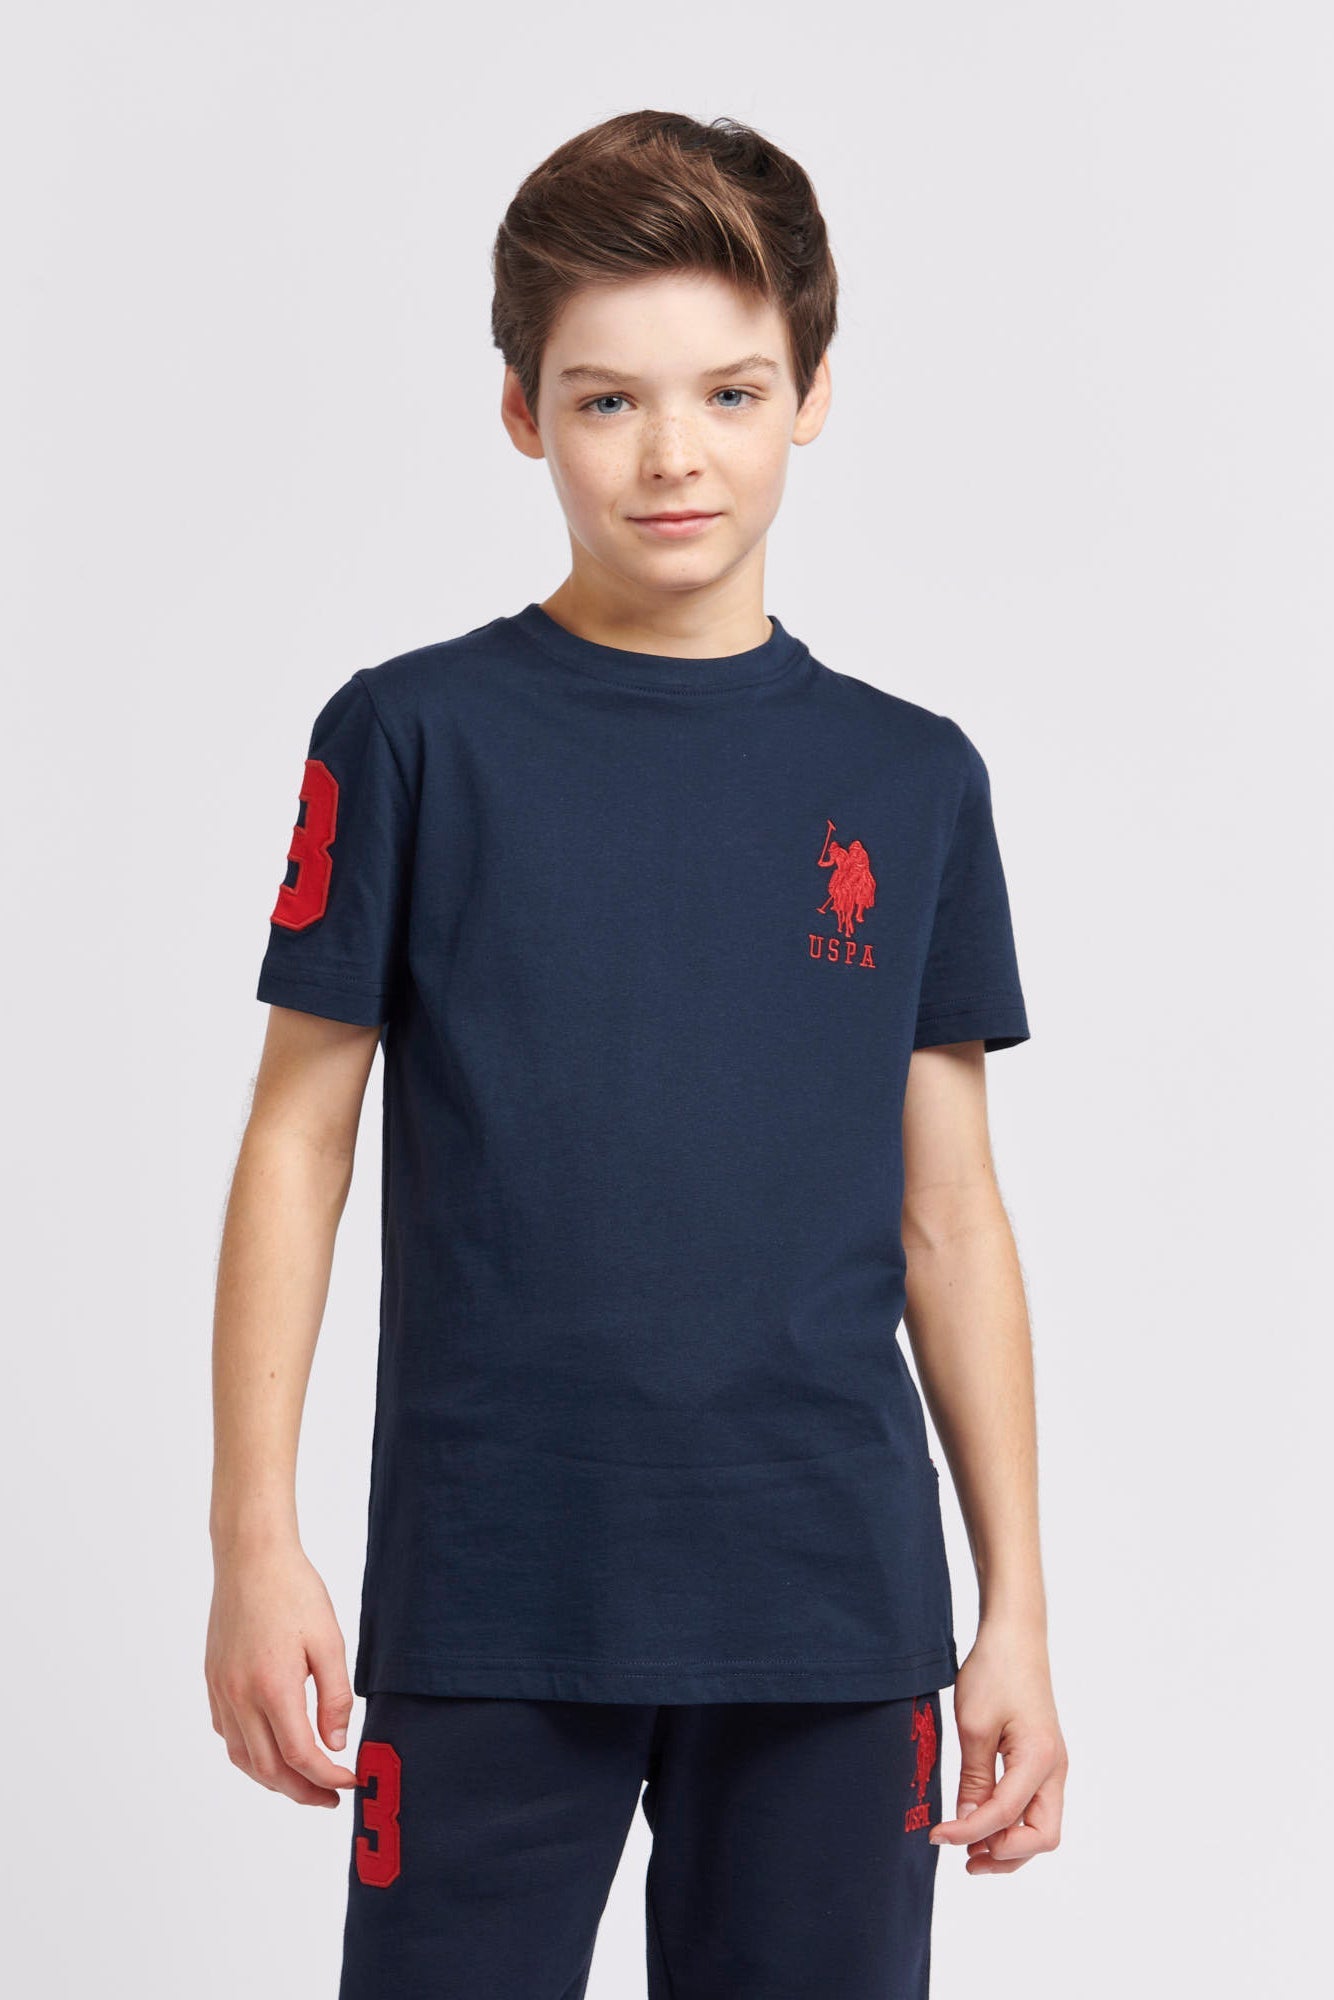 U.S. Polo Assn. Boys Player 3 T-Shirt in Dark Sapphire Navy / Haute Red DHM